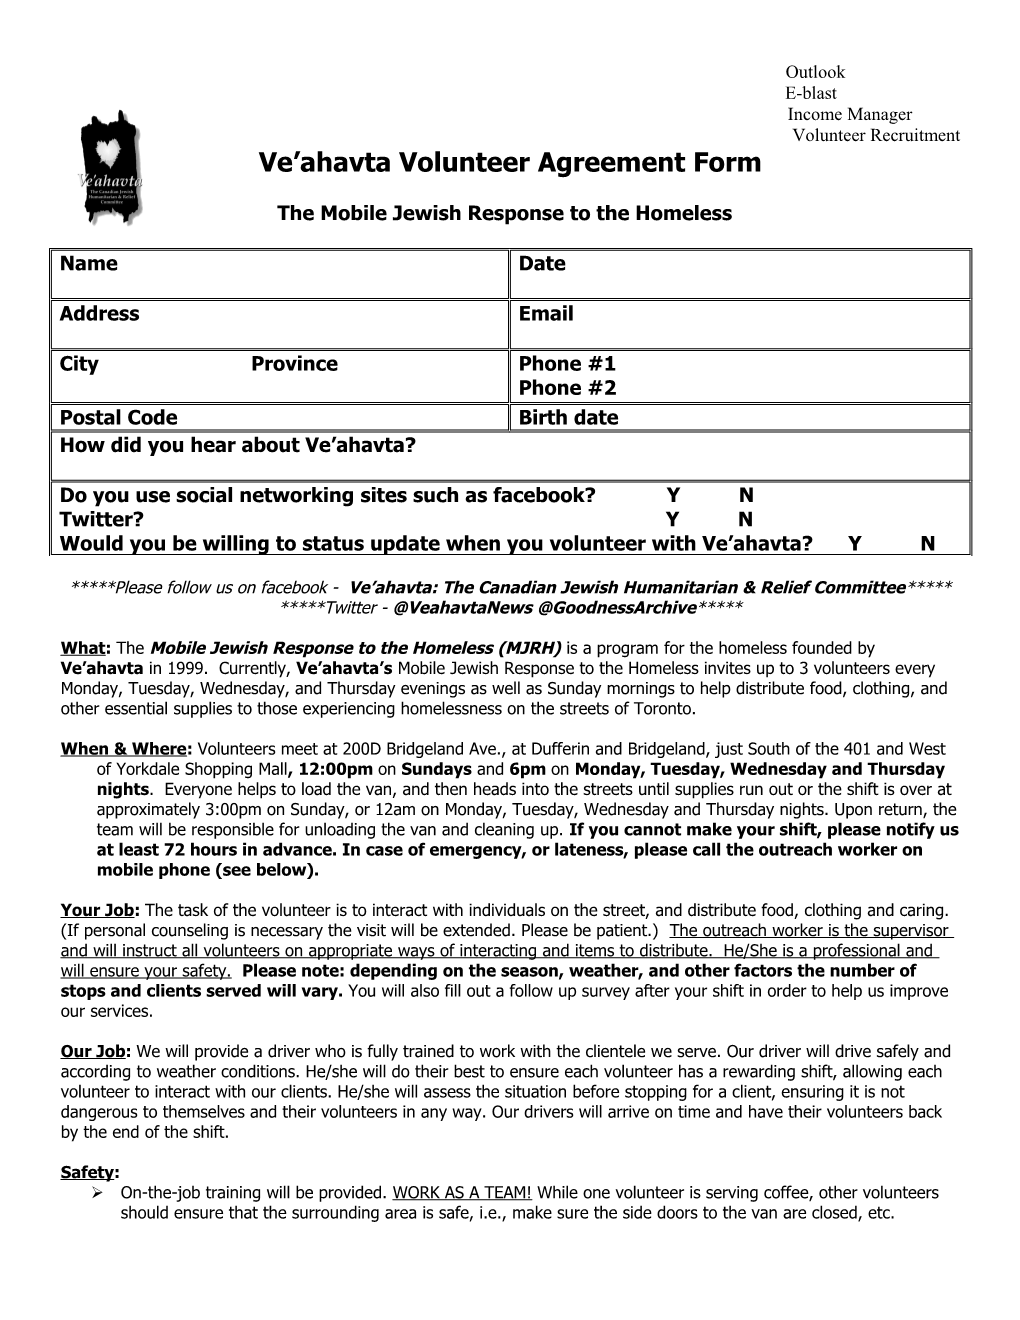 Ve Ahavta Volunteer Agreement Form